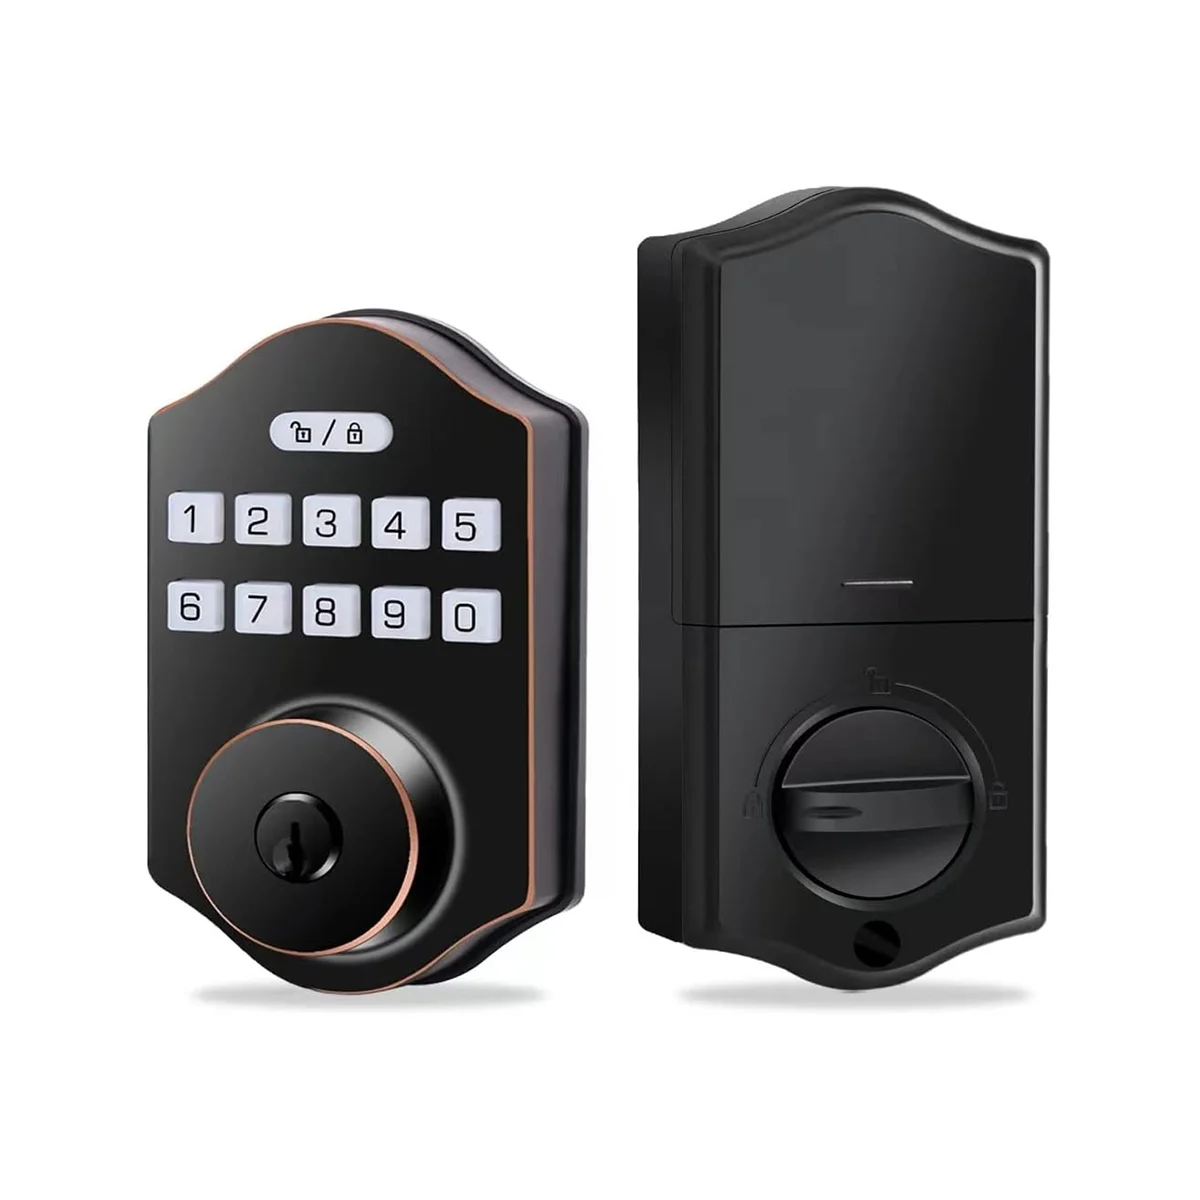 

Keyless Entry Door Lock, Electronic Deadbolt with Keypad, Auto Front Door Lock, 100 Users Codes with Anti-Peeking